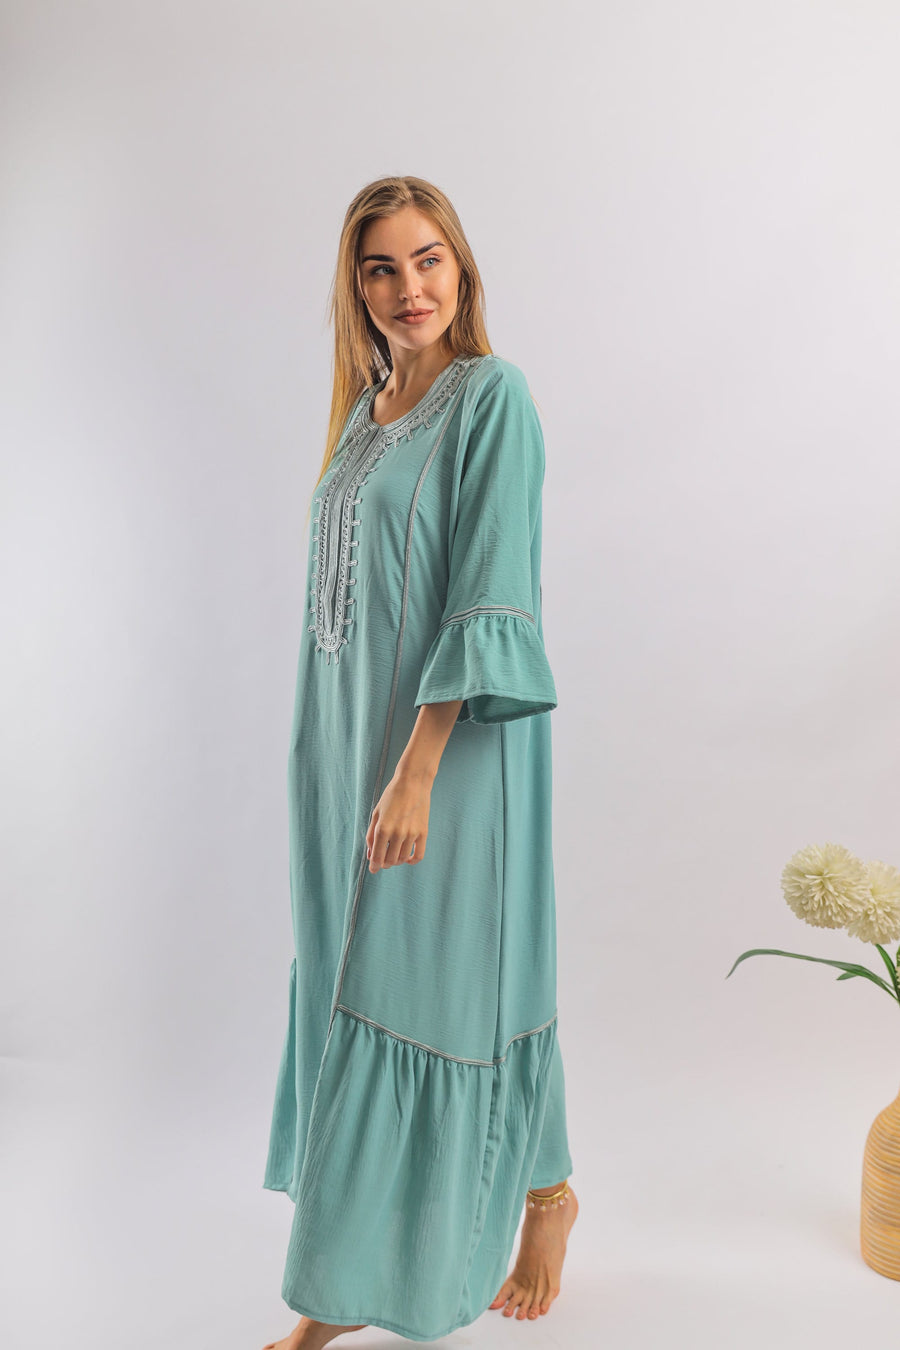 Luxurious light turquoise linen/cotton caftan, chic caftan, Summer Kaftan, Egyptian cotton/linen, Caftans for women, cotton caftan